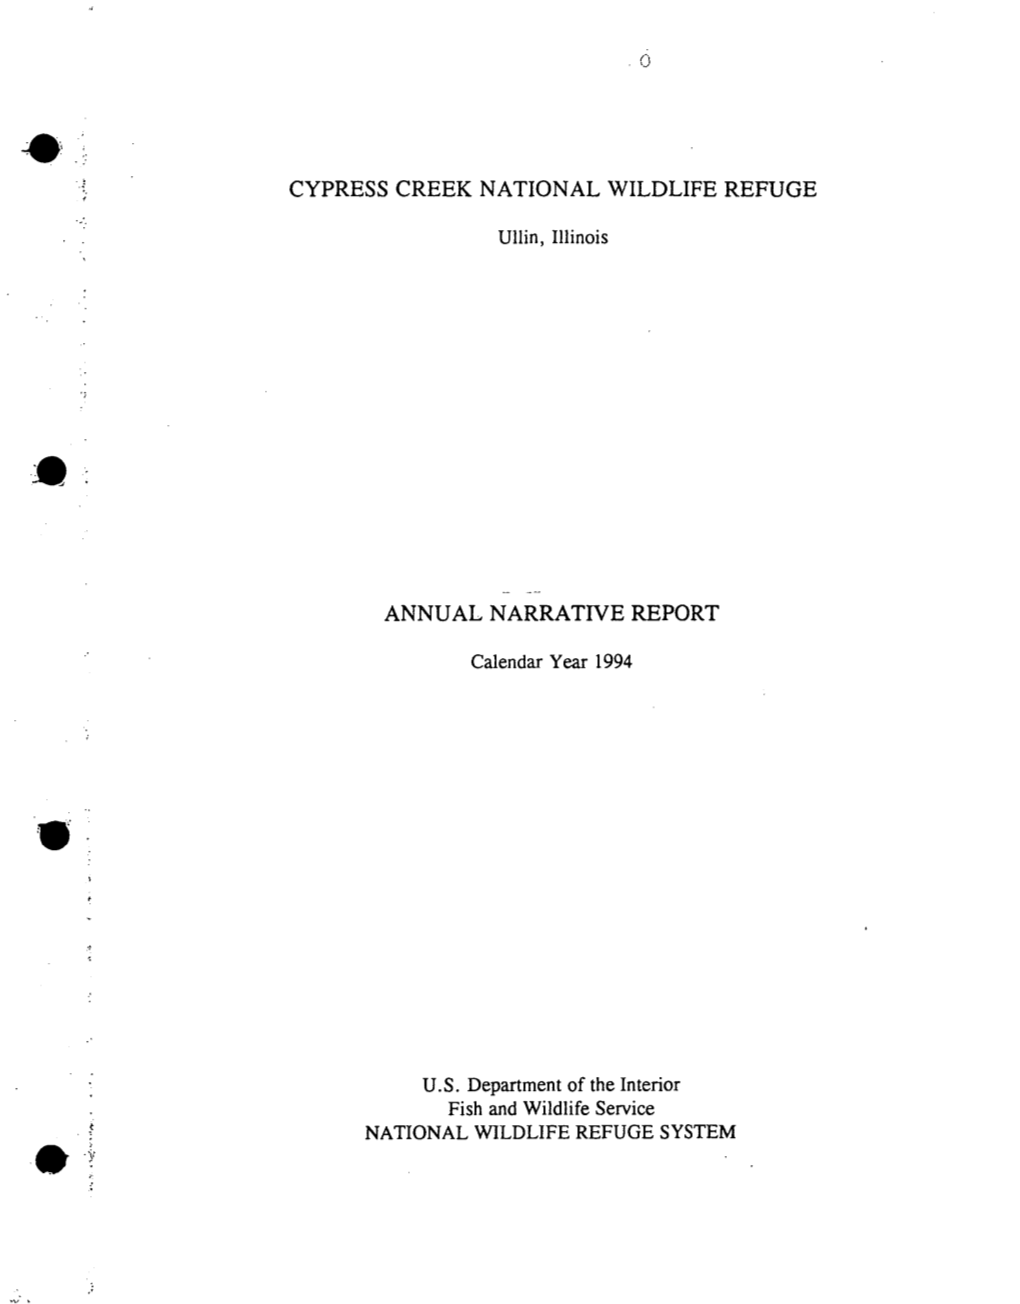 Cypress Creek National Wildlife Refuge Annual Narrative Report